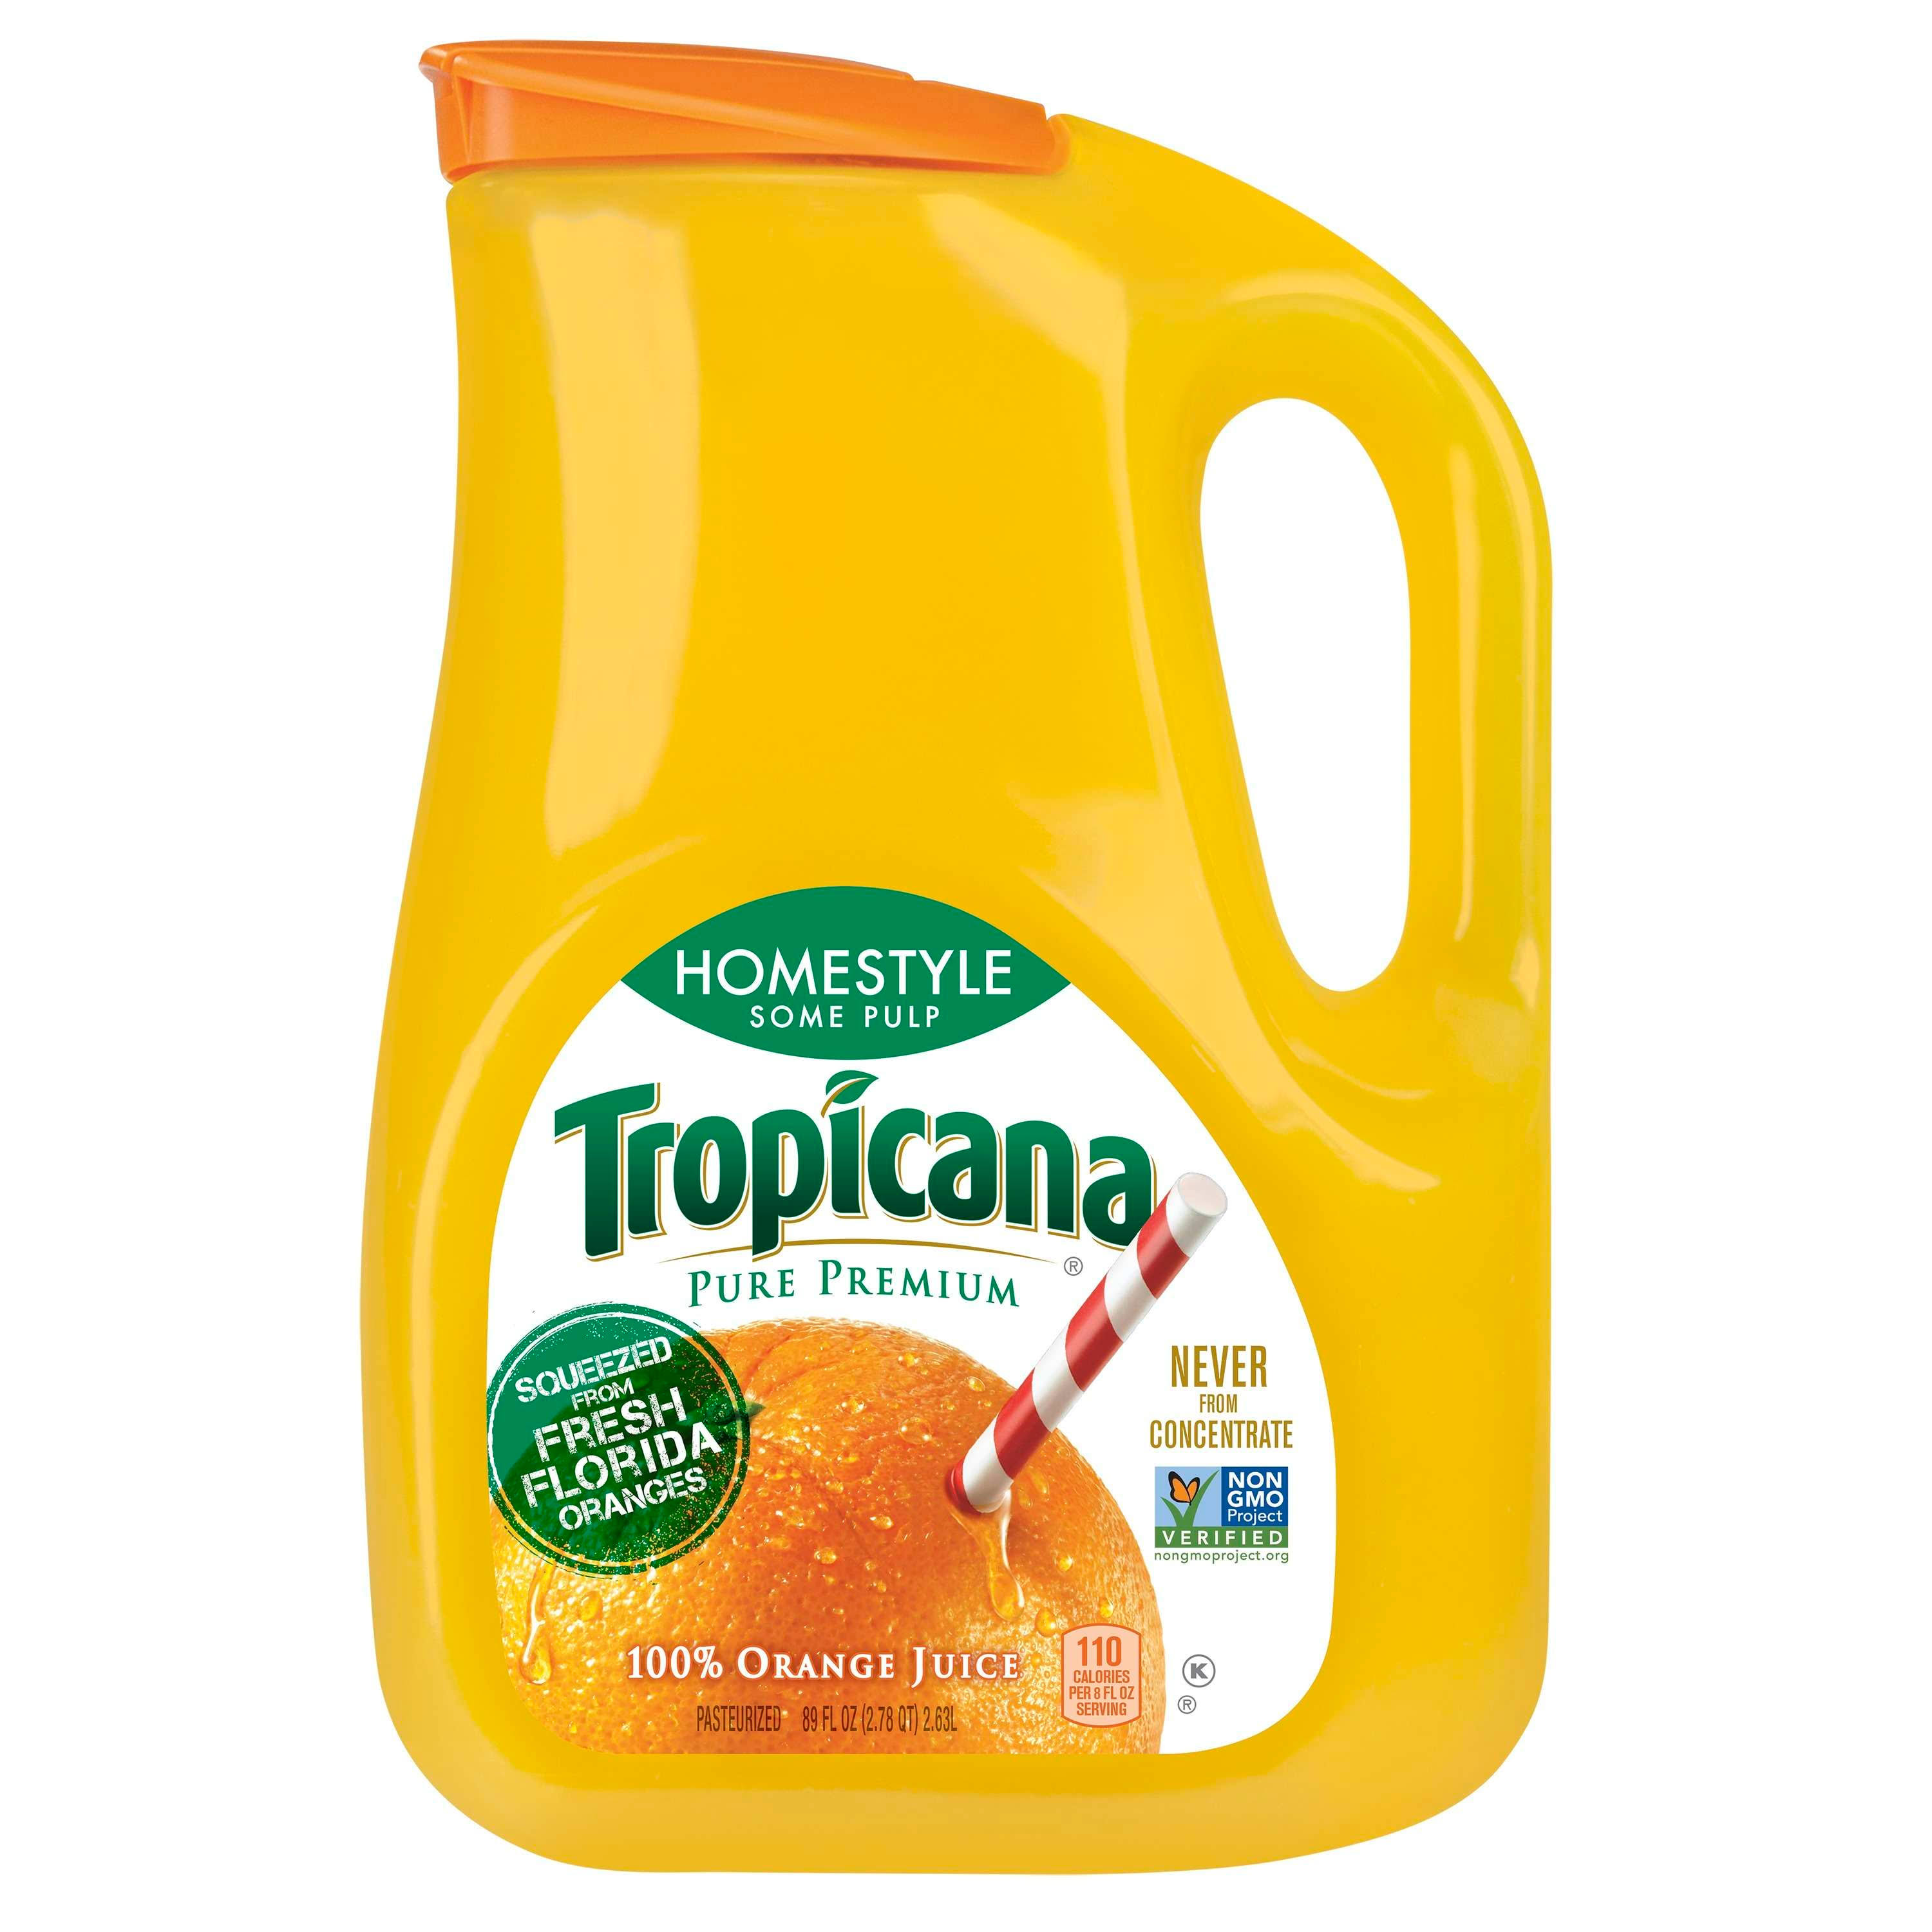 Tropicana Pure Premium Homestyle Some Pulp 100% Orange Juice - 2.83l